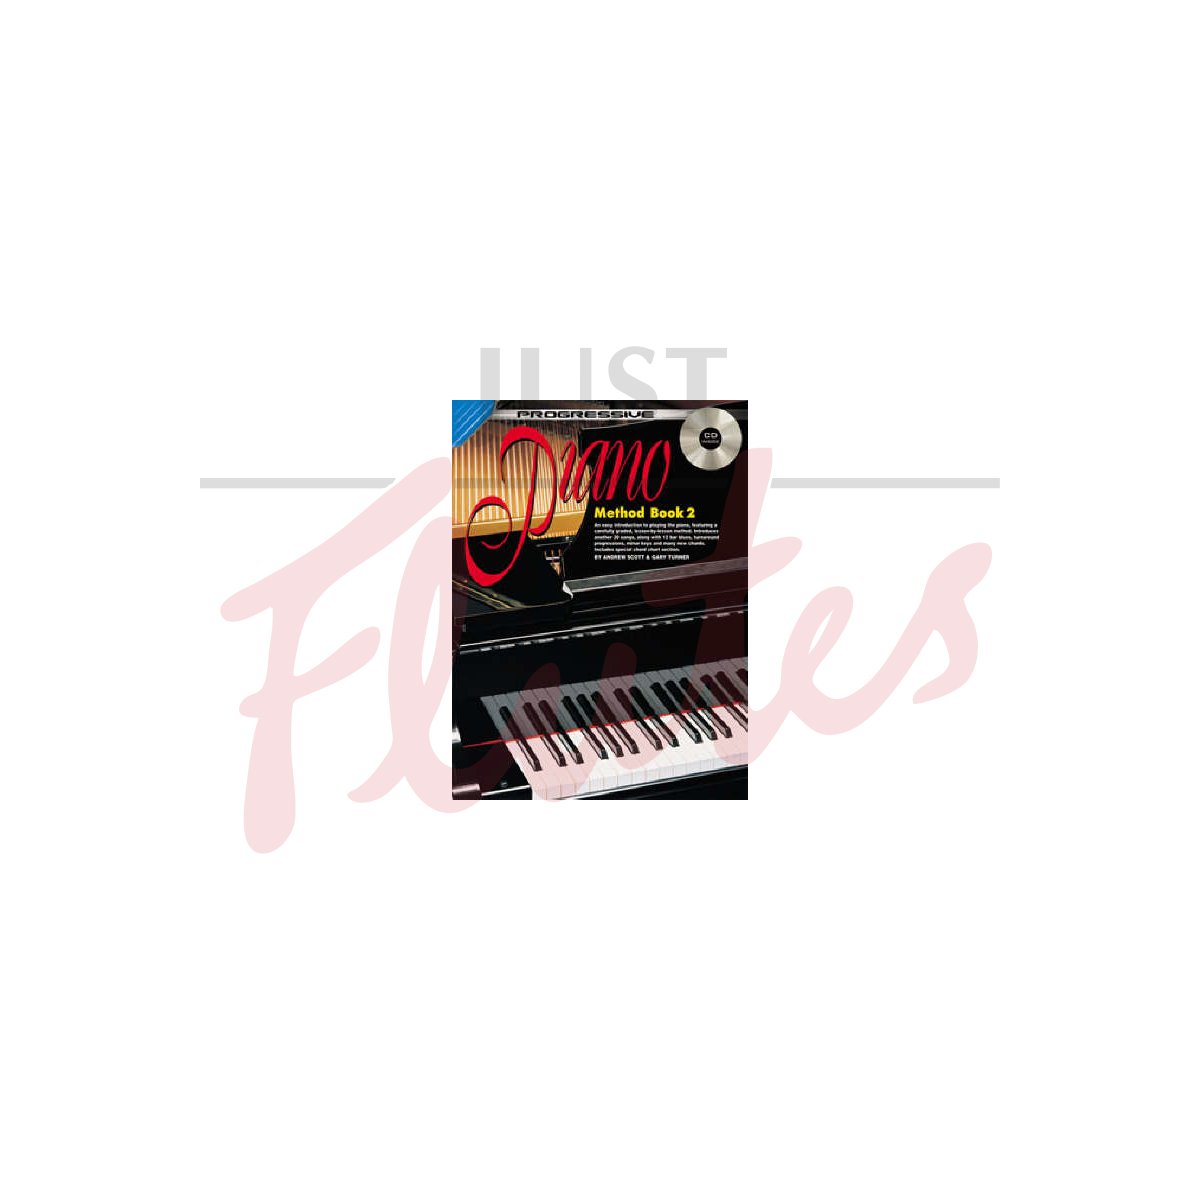 Progressive Piano Method Book 2